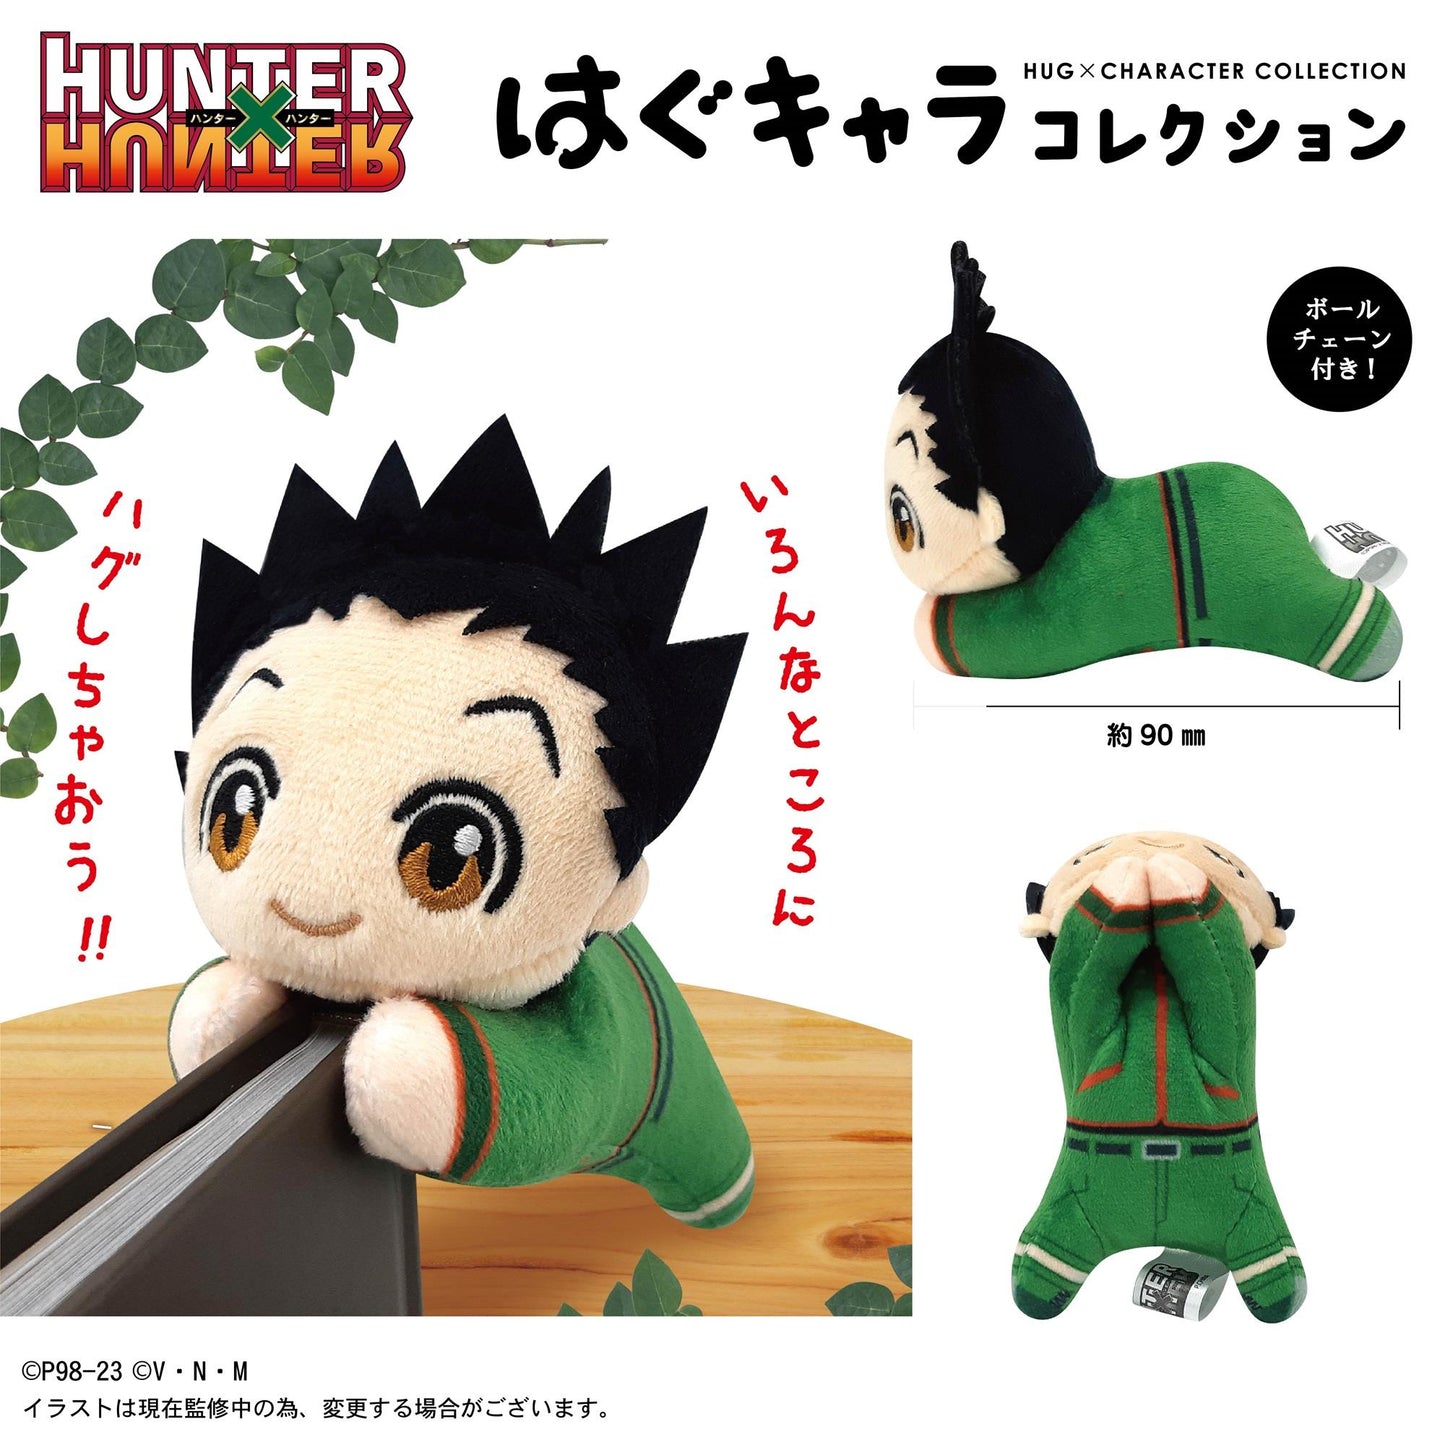 Hunter X Hunter: Hug x Character Plush Mascot Blind Box